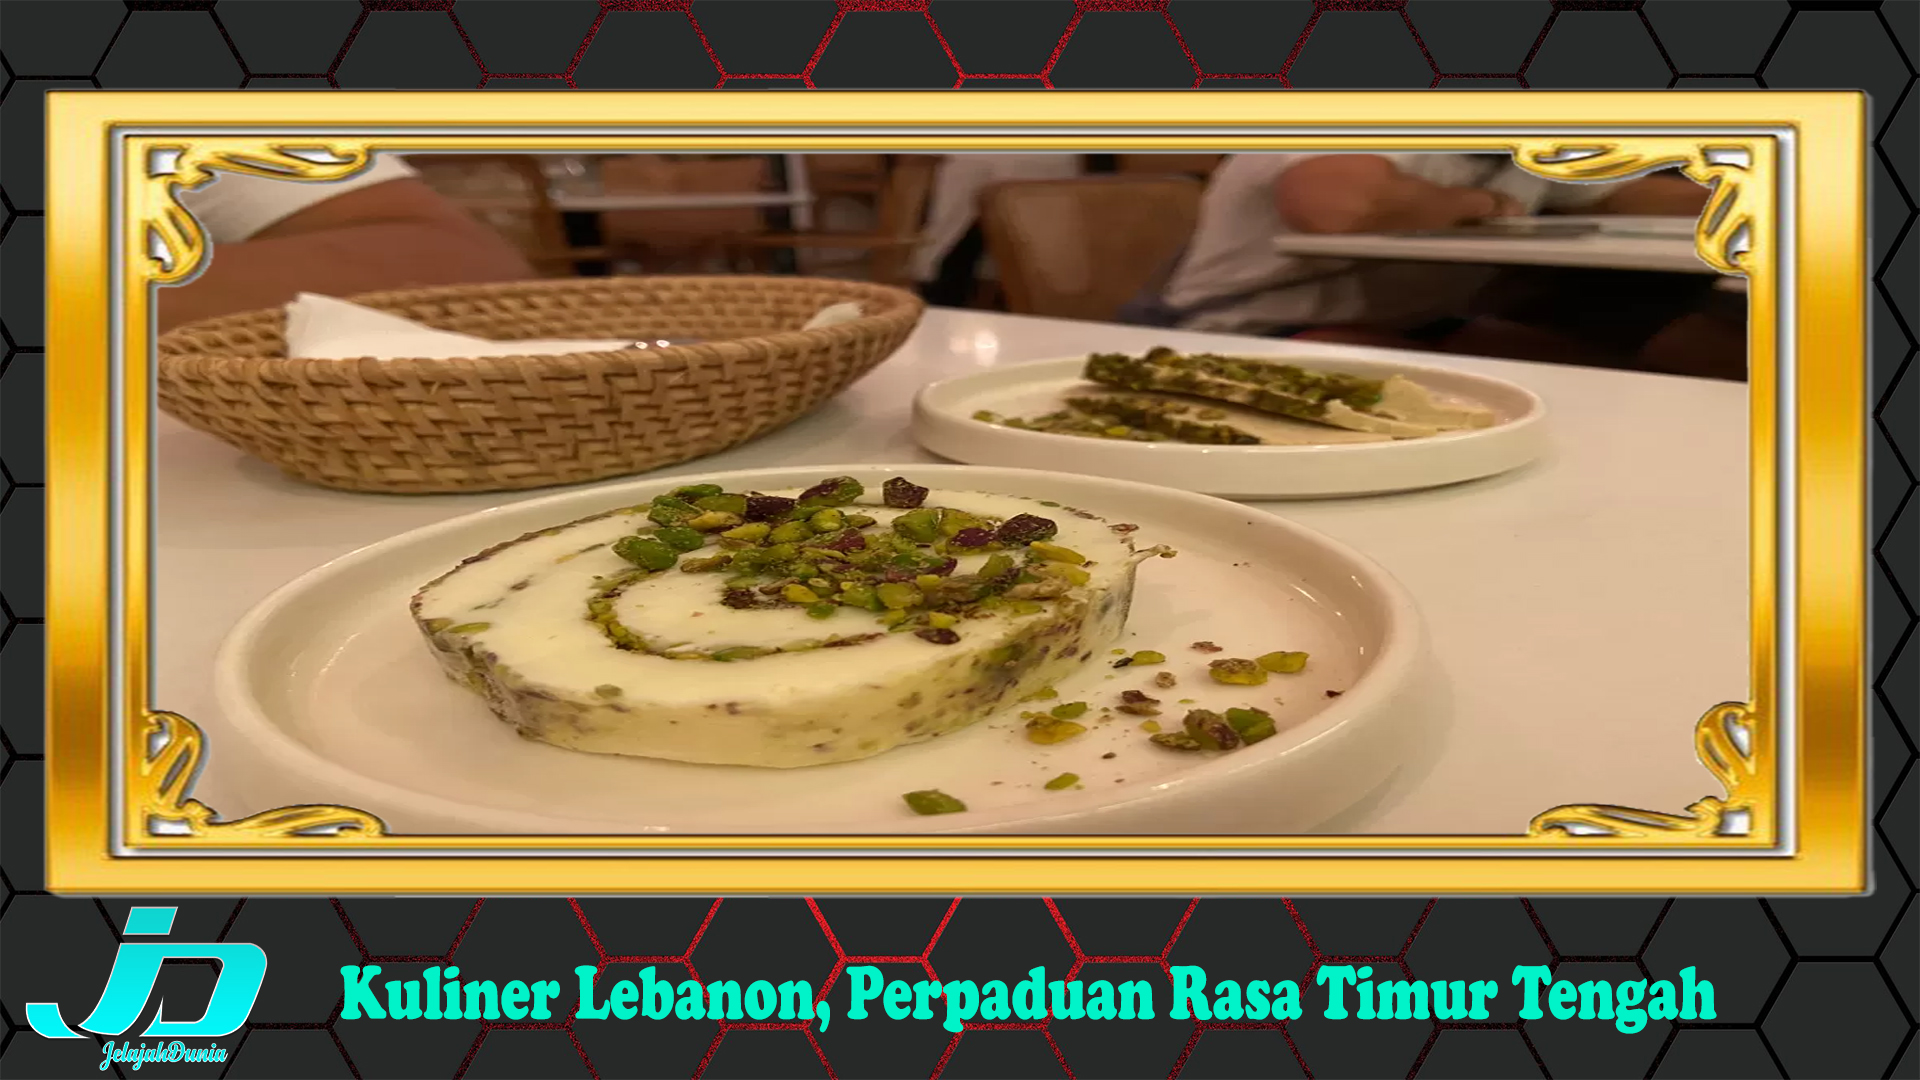 Kuliner Lebanon, Perpaduan Rasa Timur Tengah